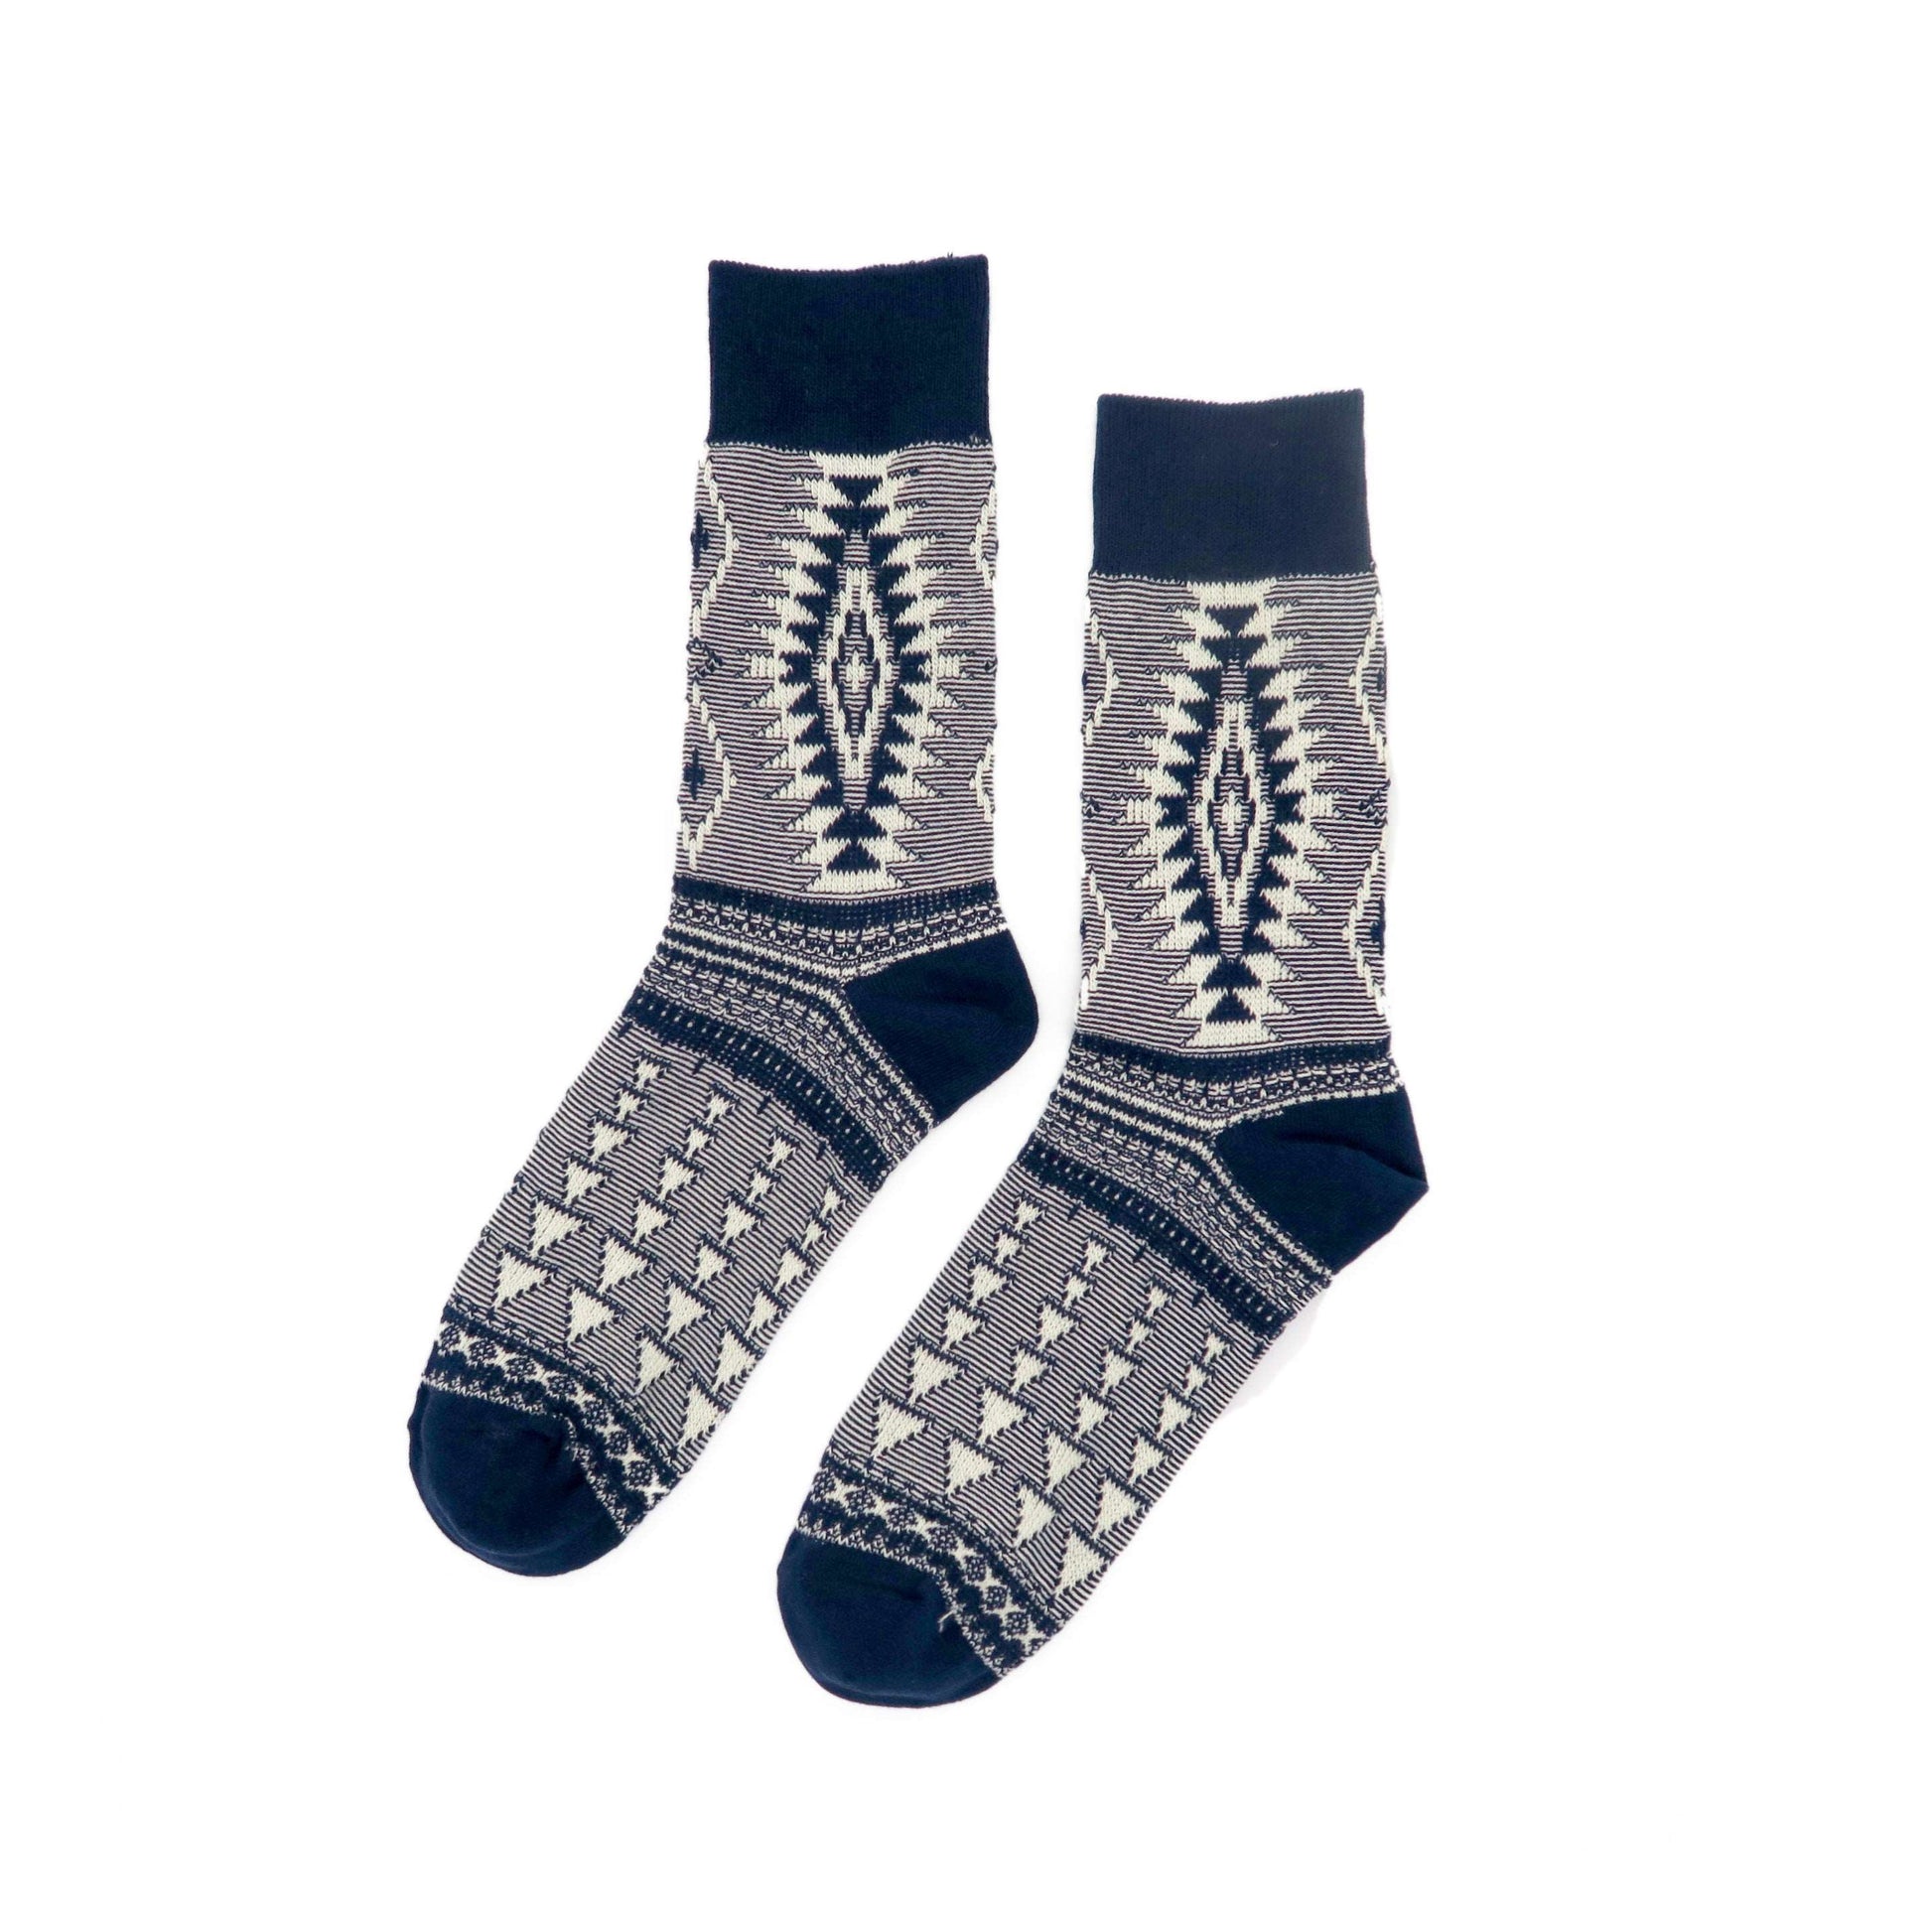 Africa Tribal Socks - Navy color - front